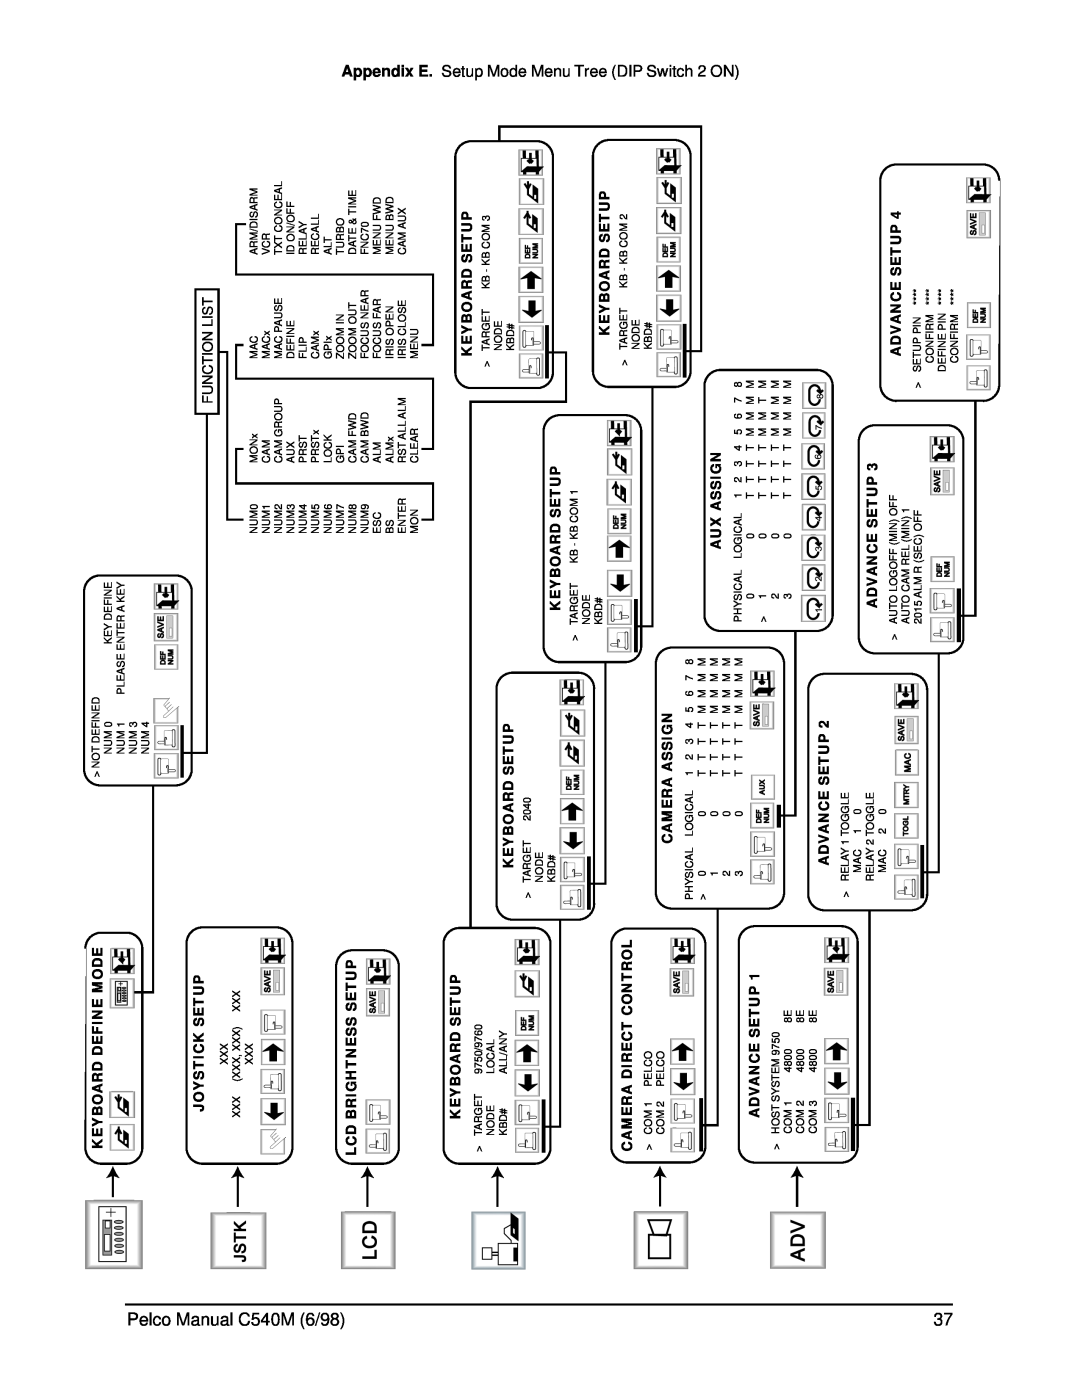 Pelco C540M (6/98) Appendix E. Setup Mode Menu, Tree DIP Switch 2 ON, Pelco Manual C540M 6/98, Keyboard Define Mode 